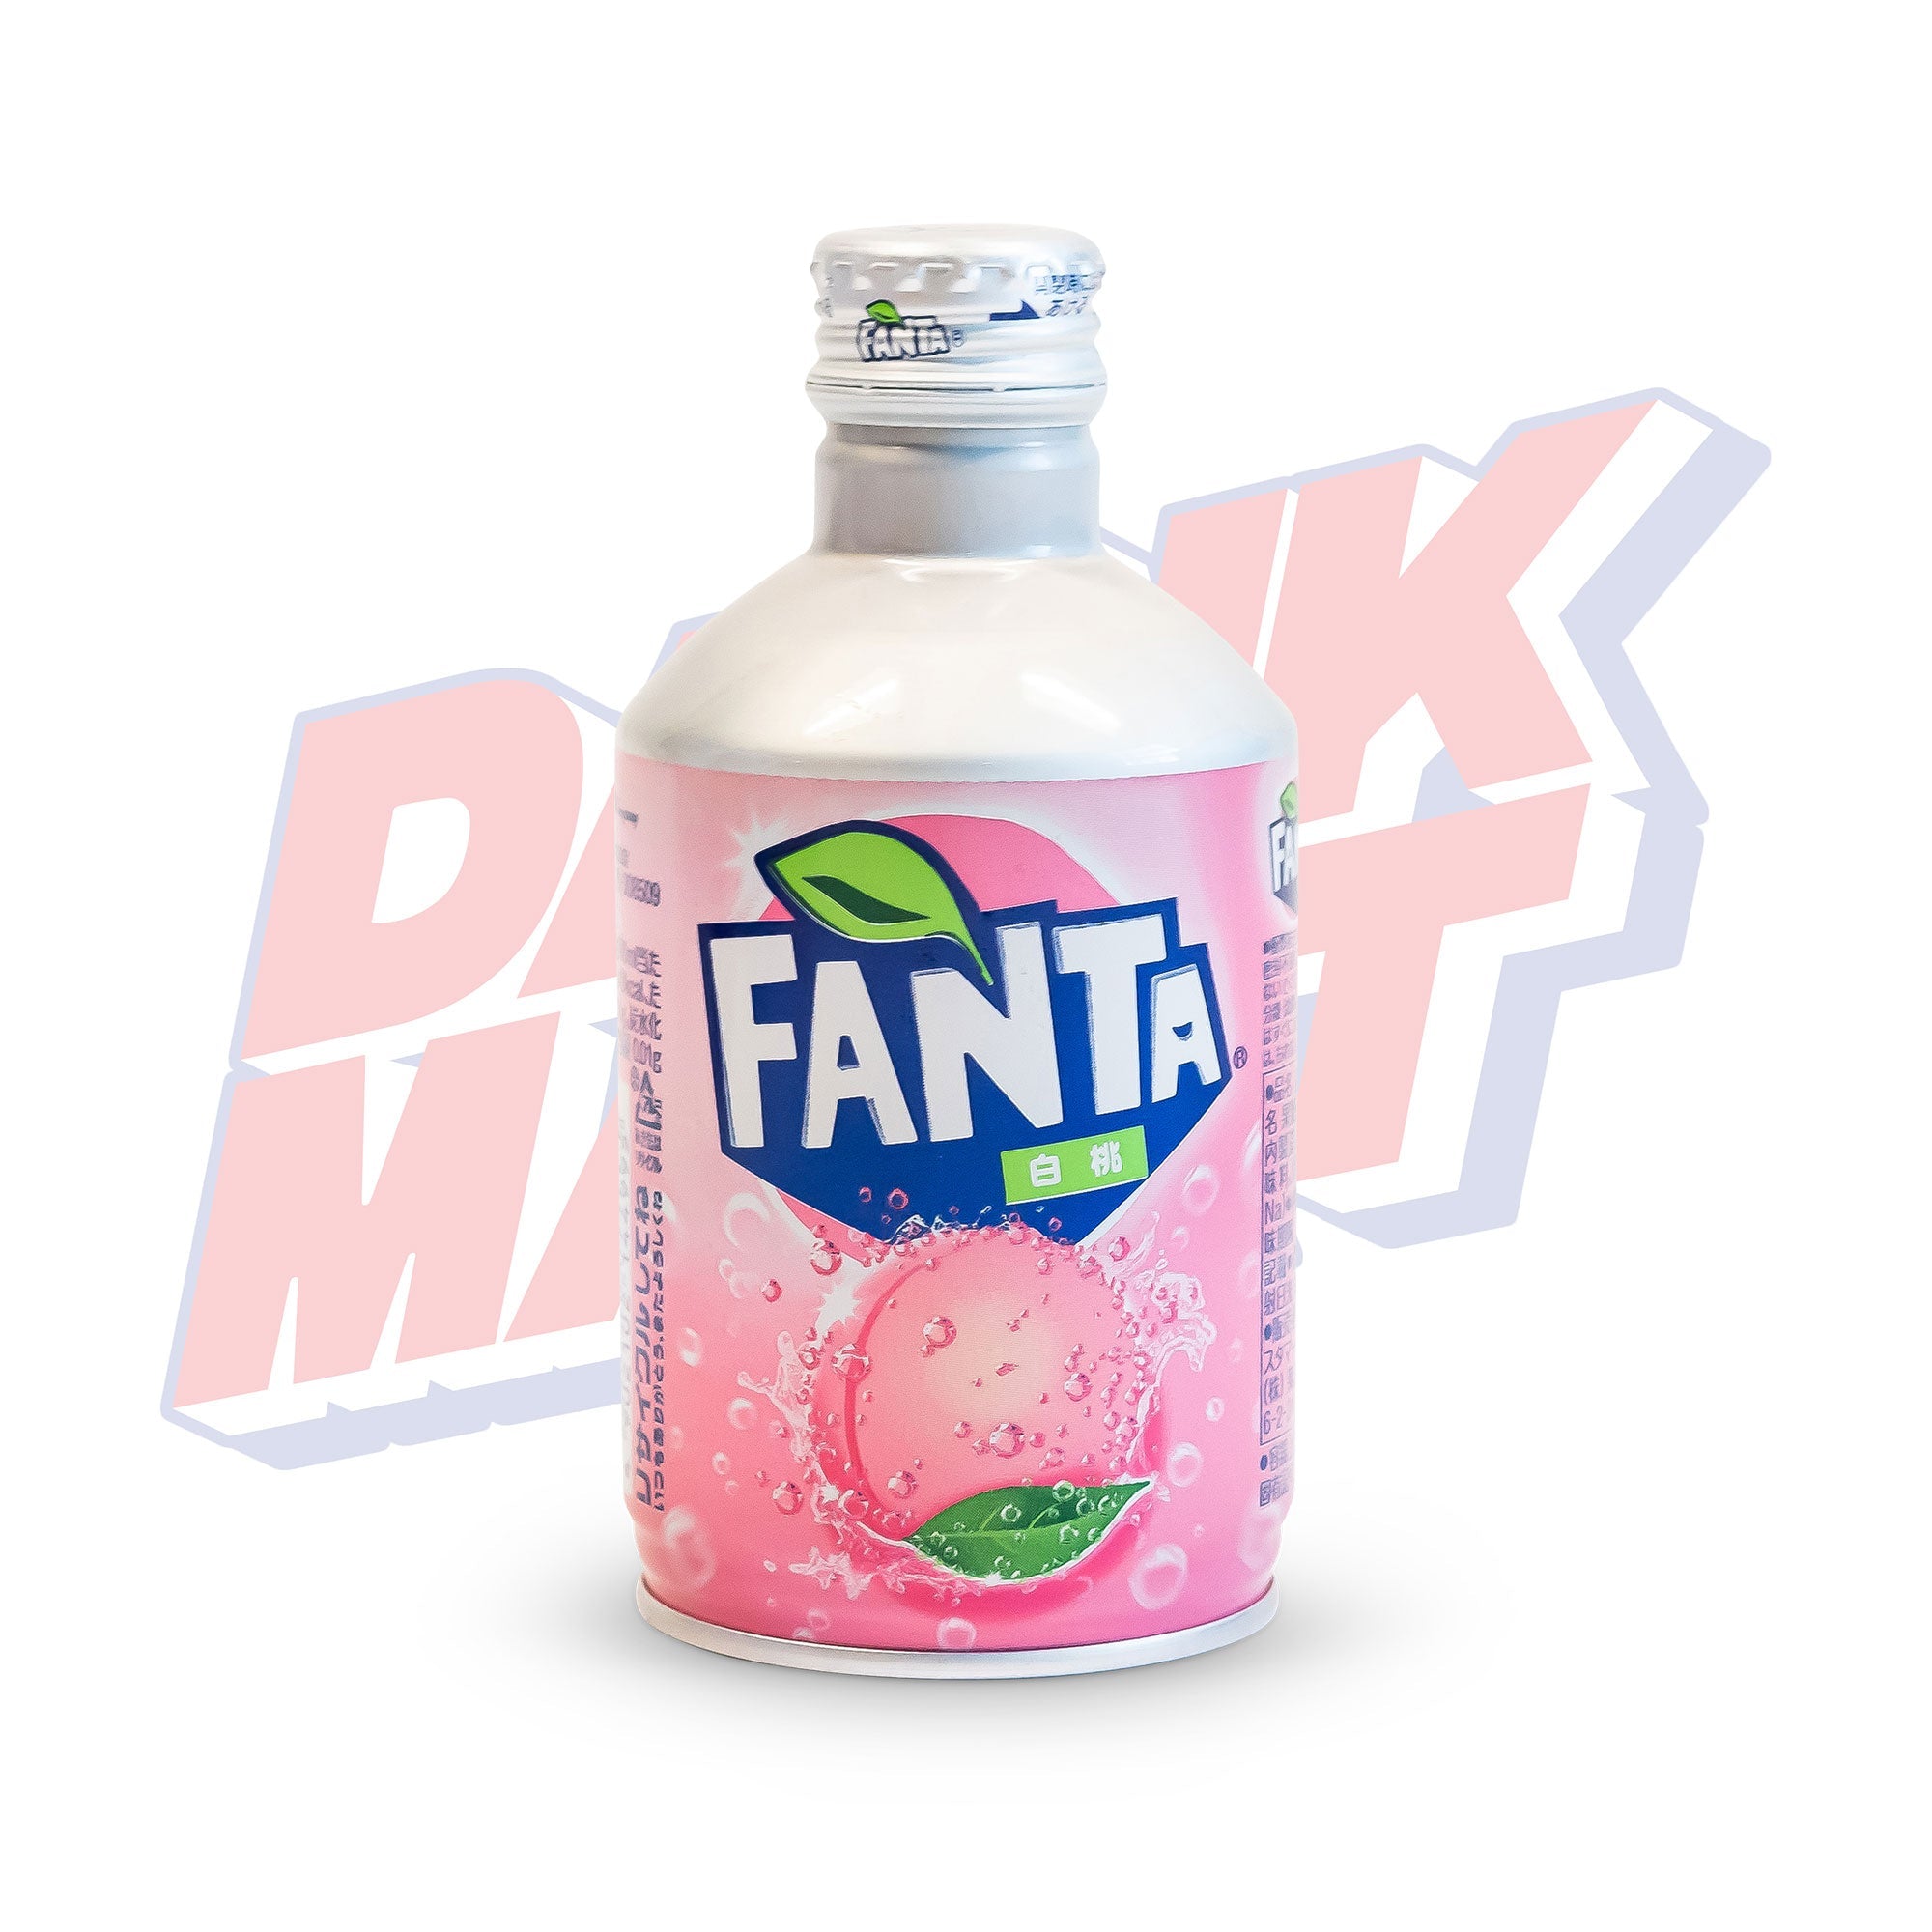 Fanta Peach (Japan) - 300ml